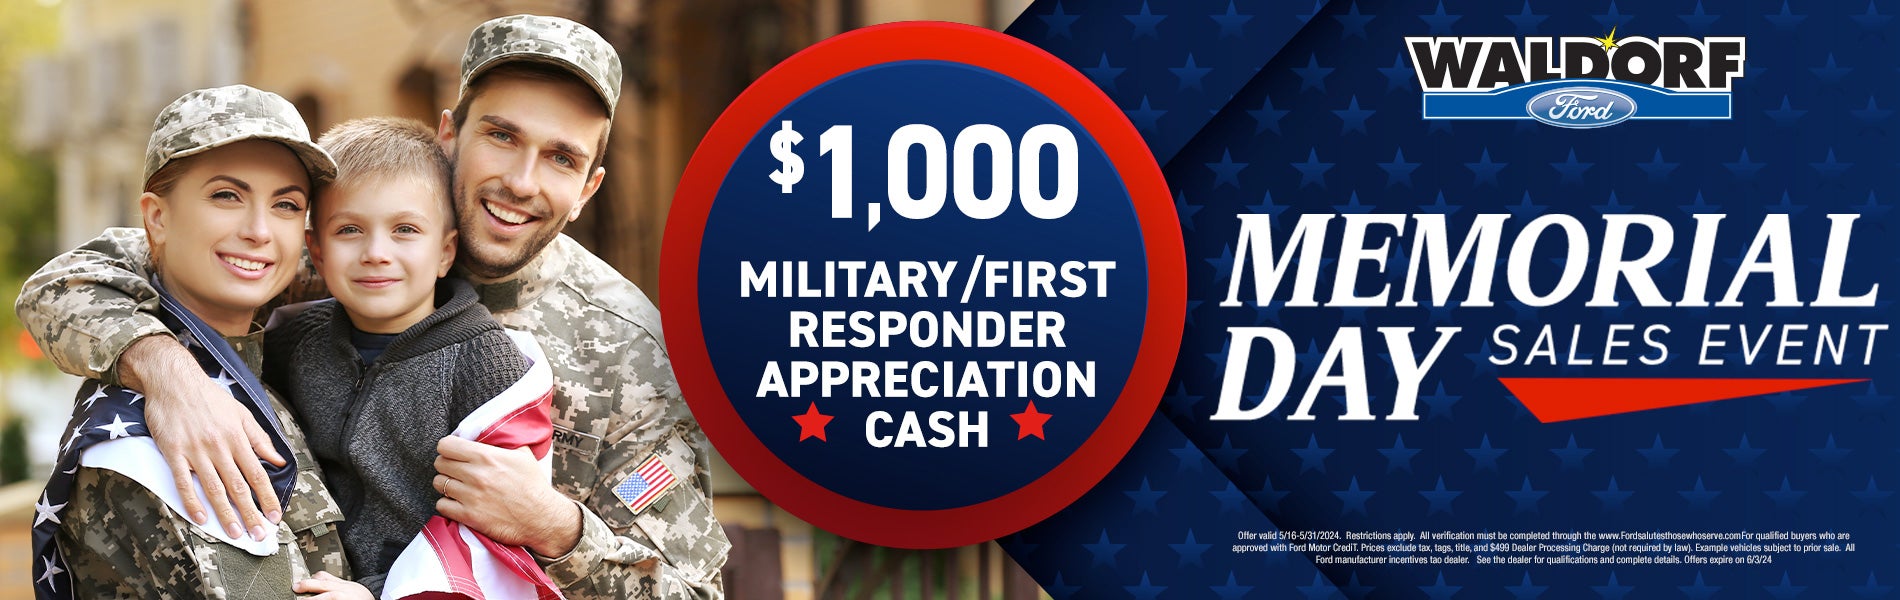 $1,000 Military/First Responder Appreciation Cash!